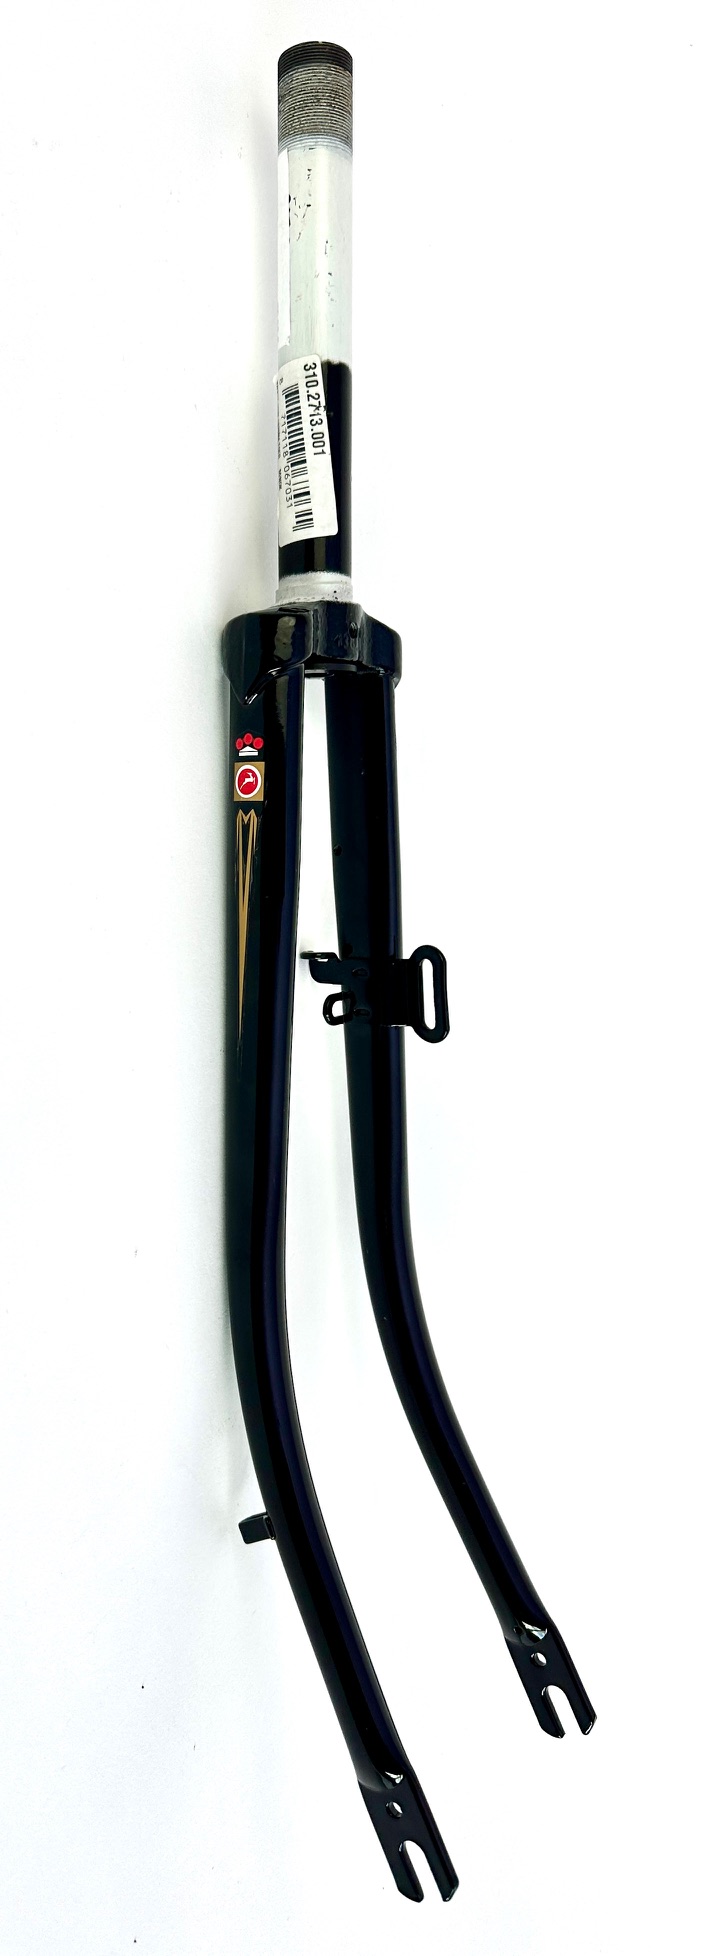 Gazelle bicycle fork 28 inch shaft length 180, black